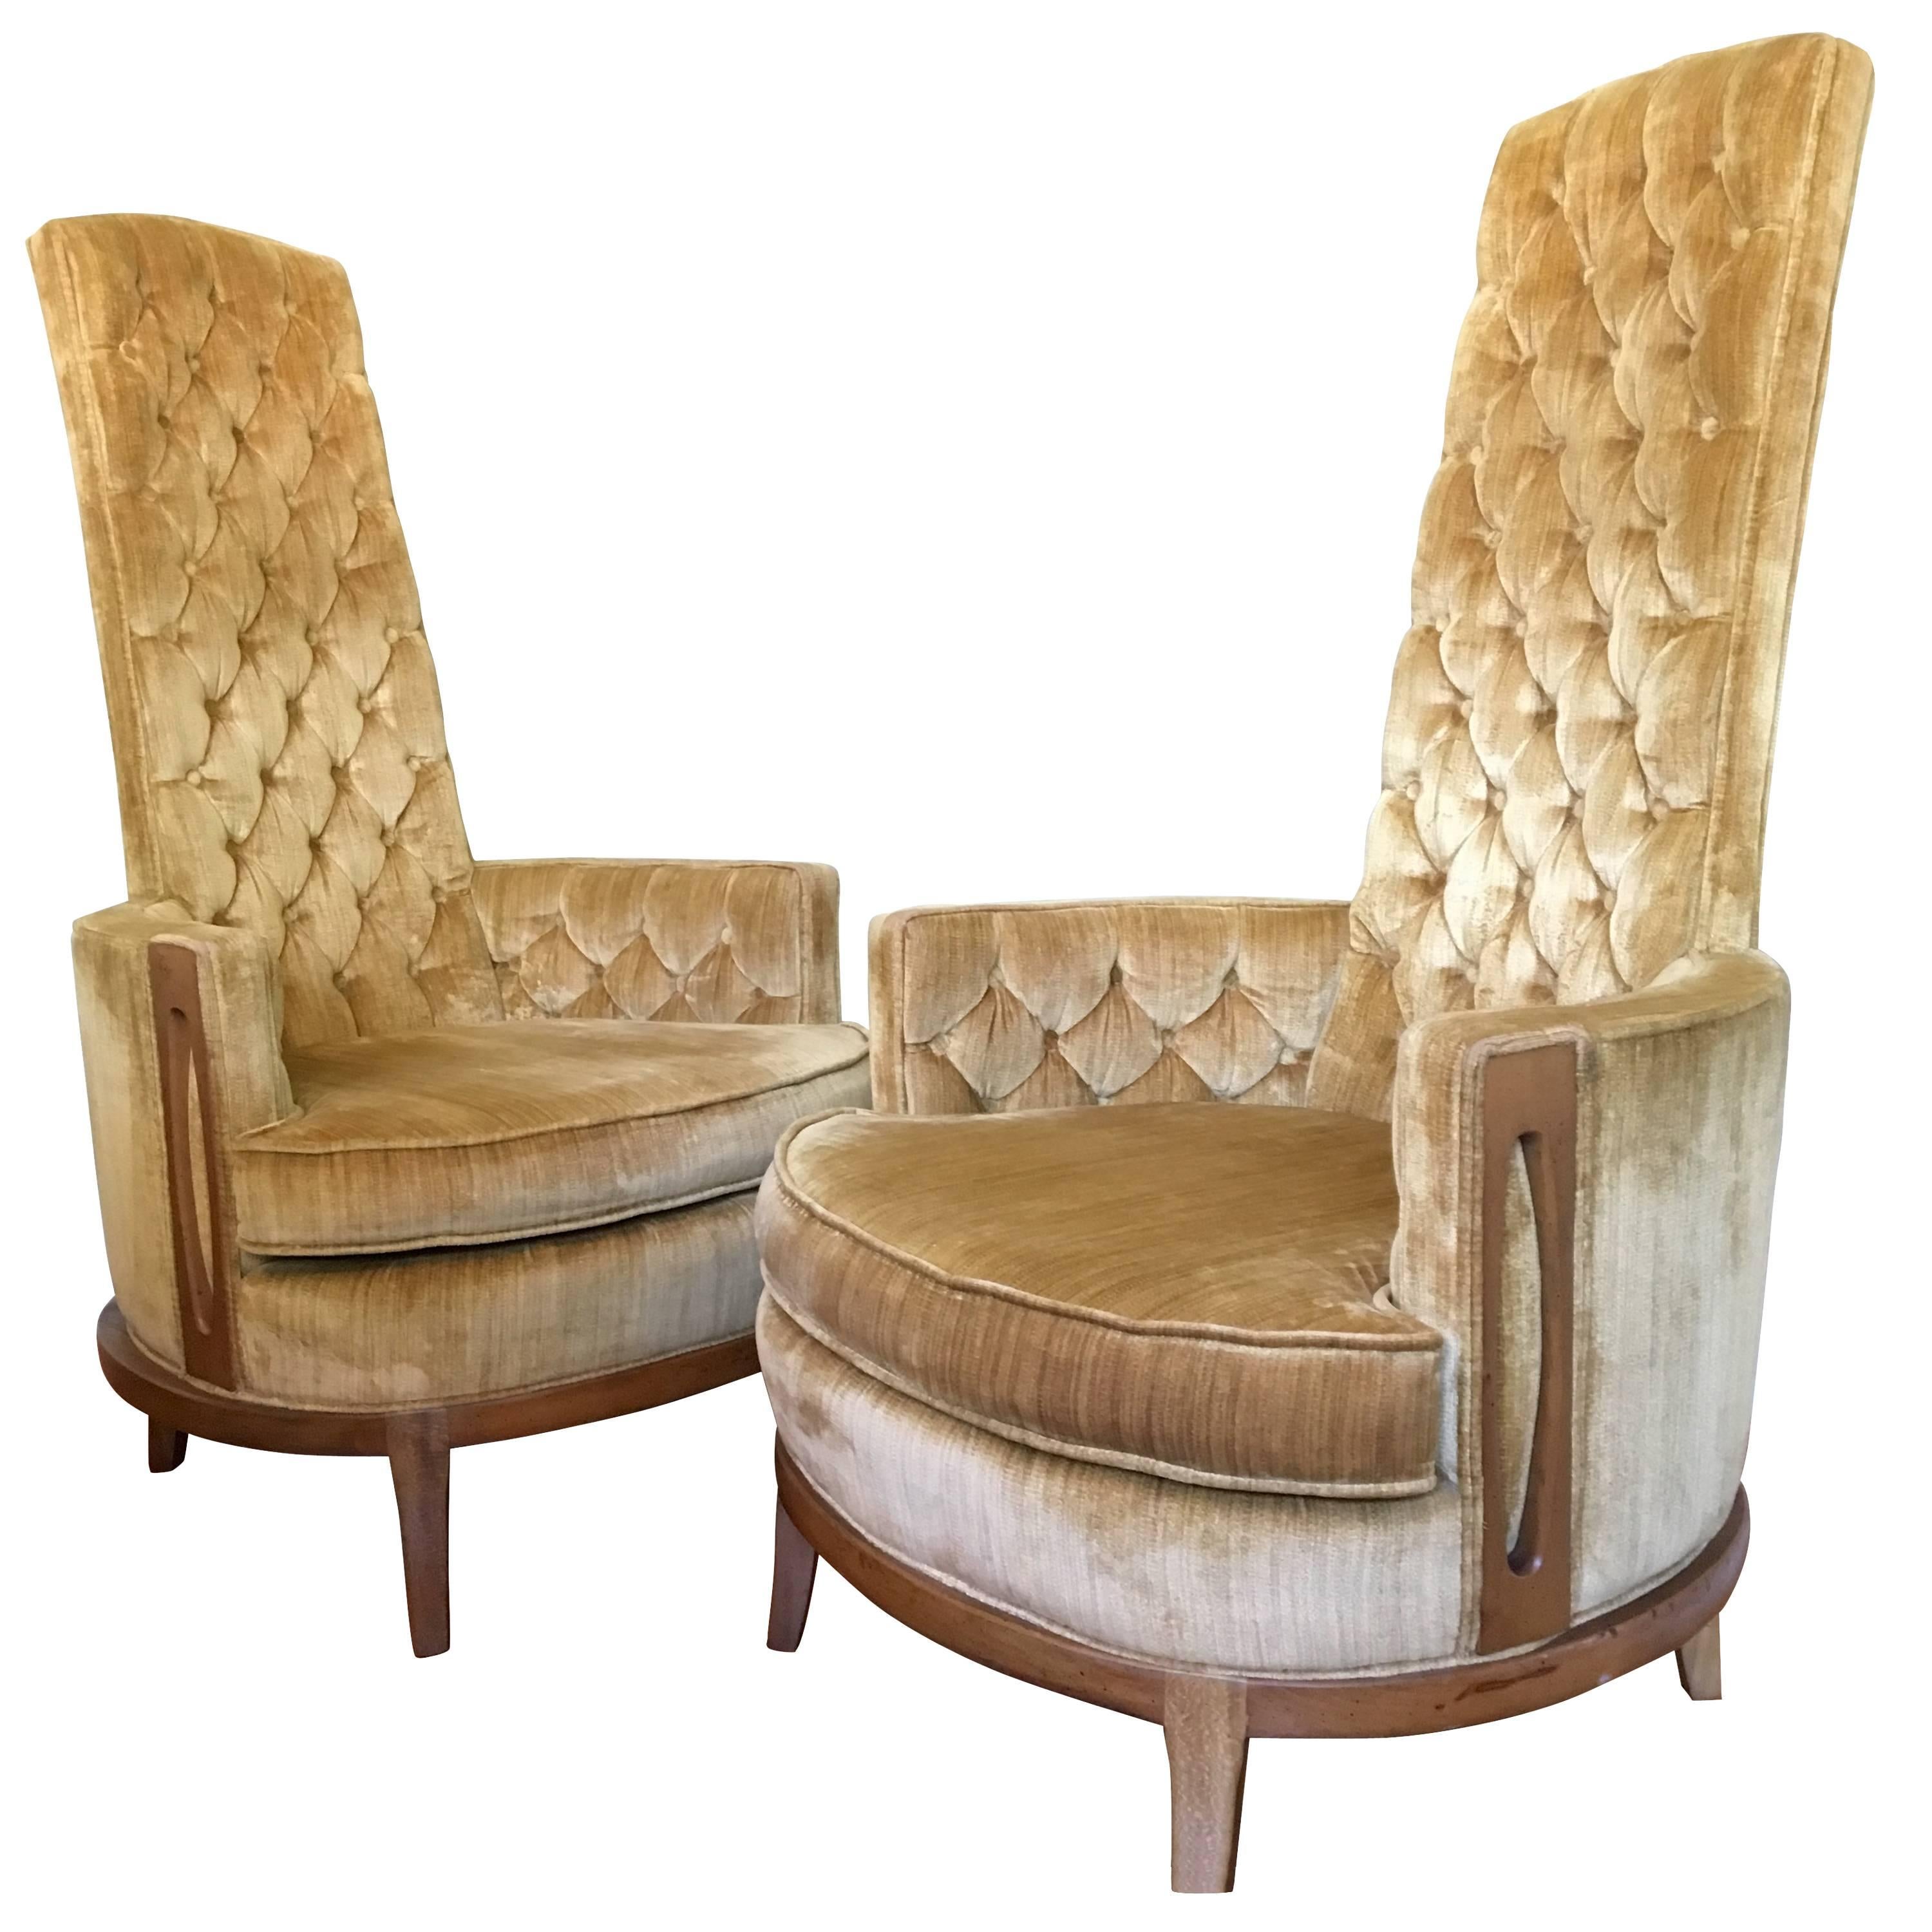 Hollywood Regency Pair of High Back Chairs in Vintage Tufted Gold Velvet